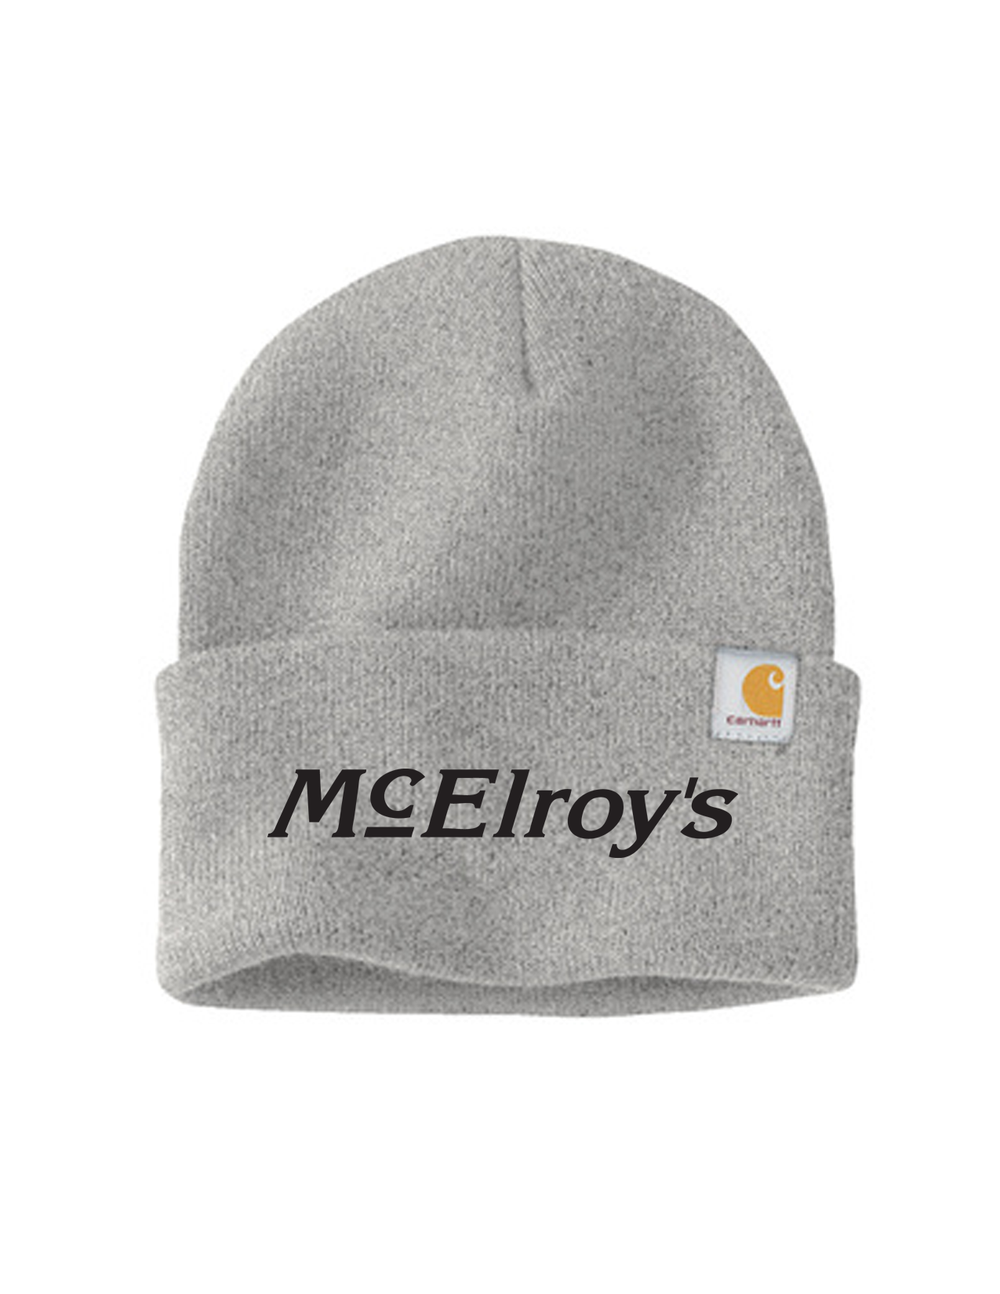 McElroy's, Inc. - Carhartt Watch Cap 2.0 - CT104597